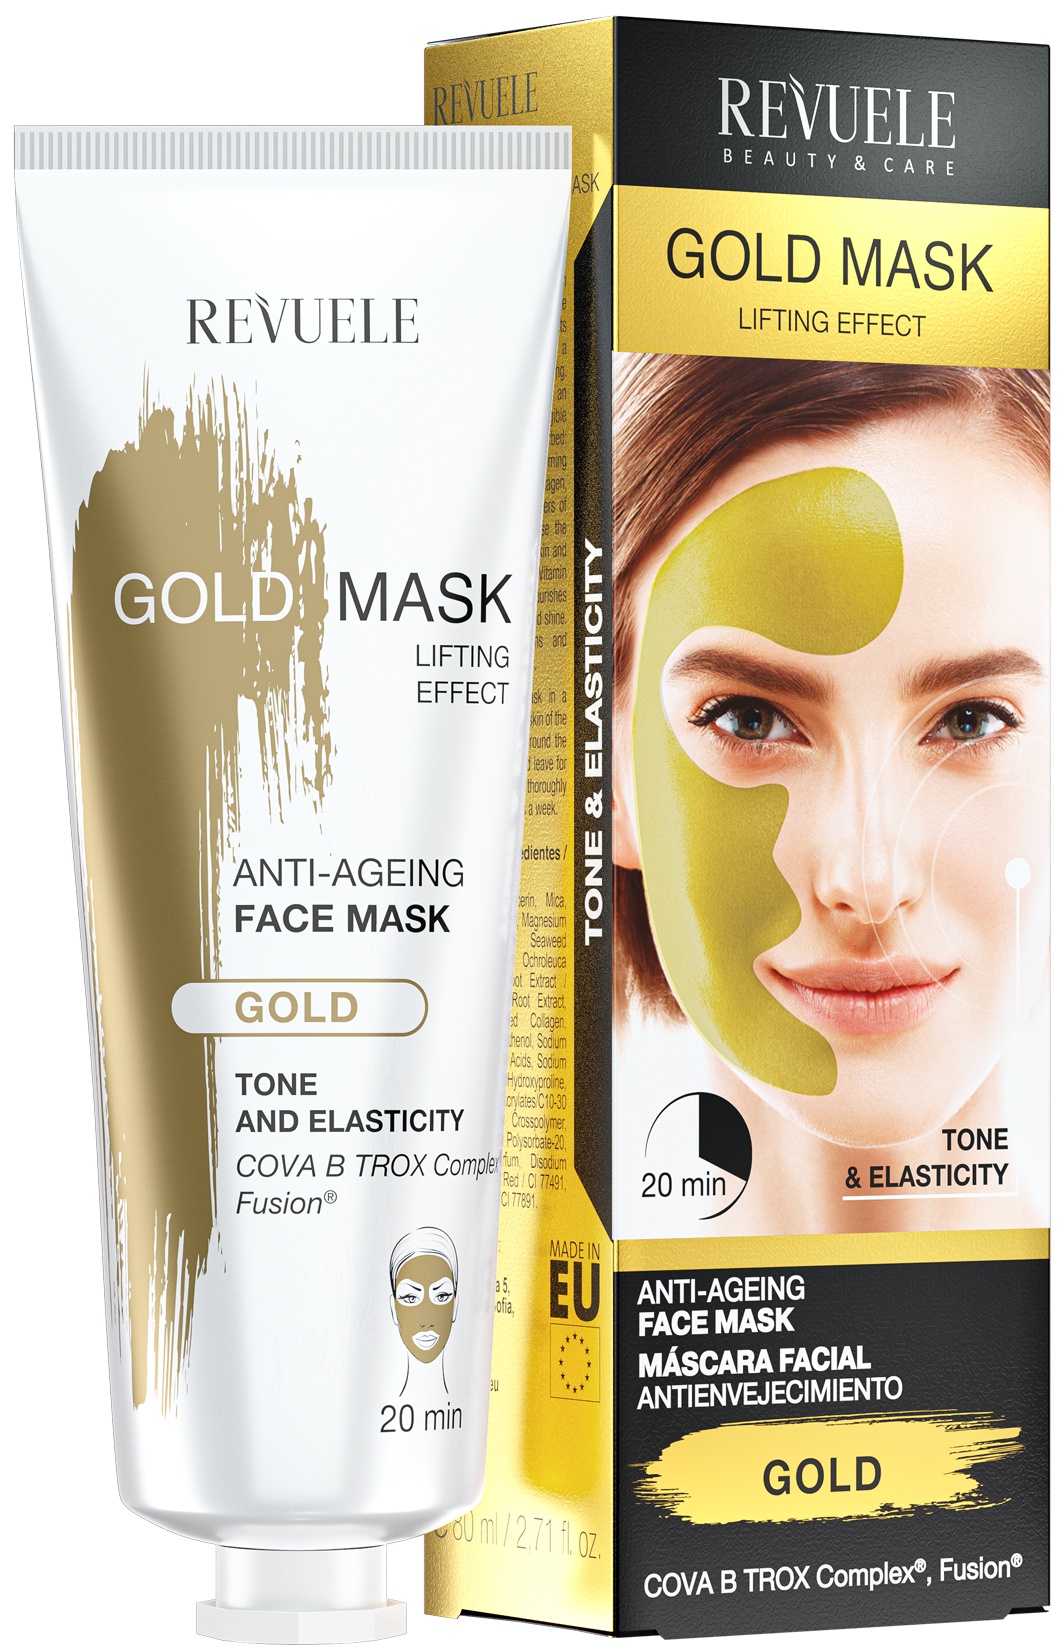 Revuele Gold Mask